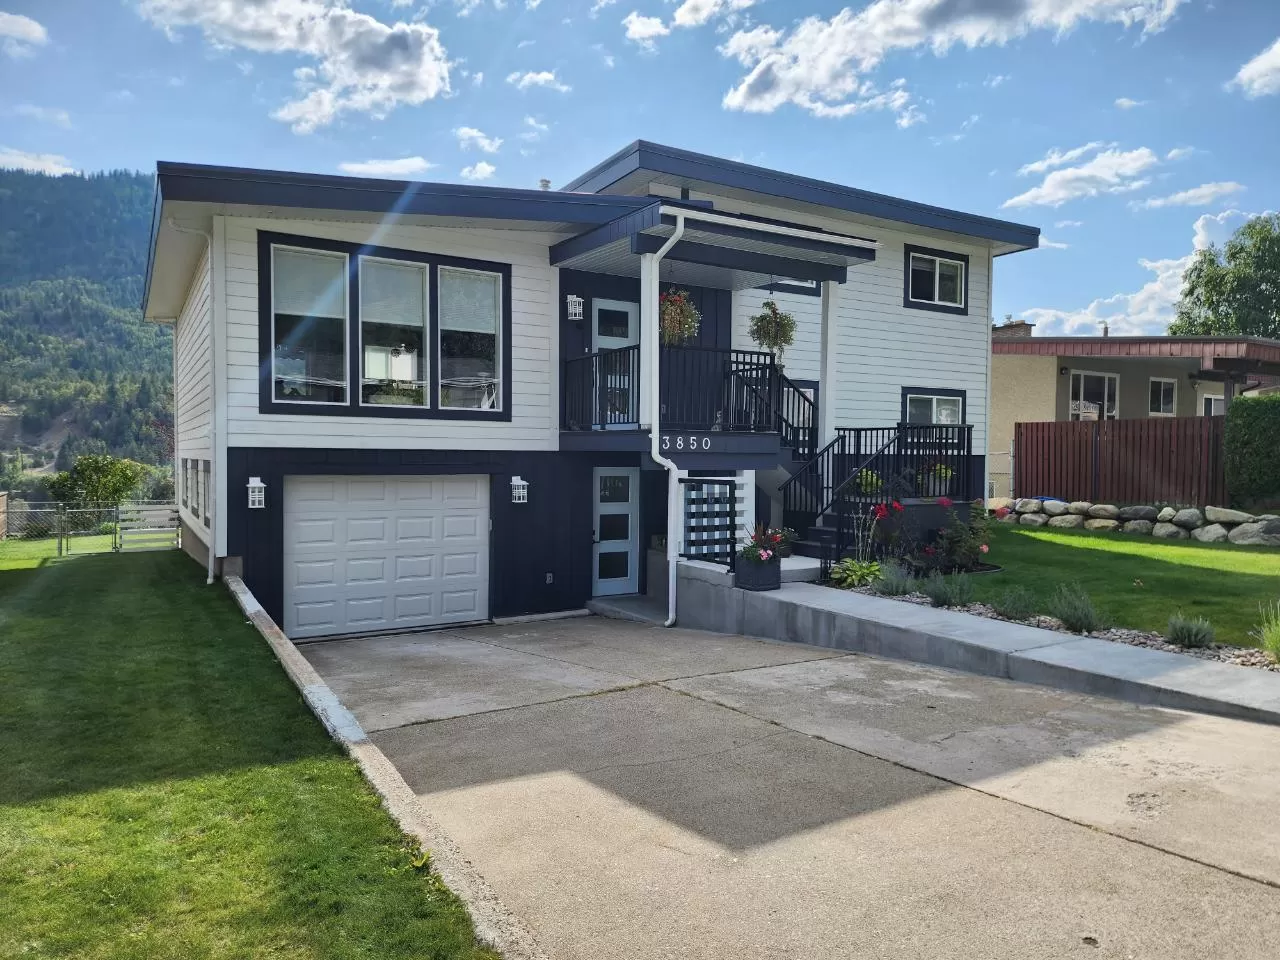 House for rent: 3850 Dogwood Drive, Trail, British Columbia V1R 2V5